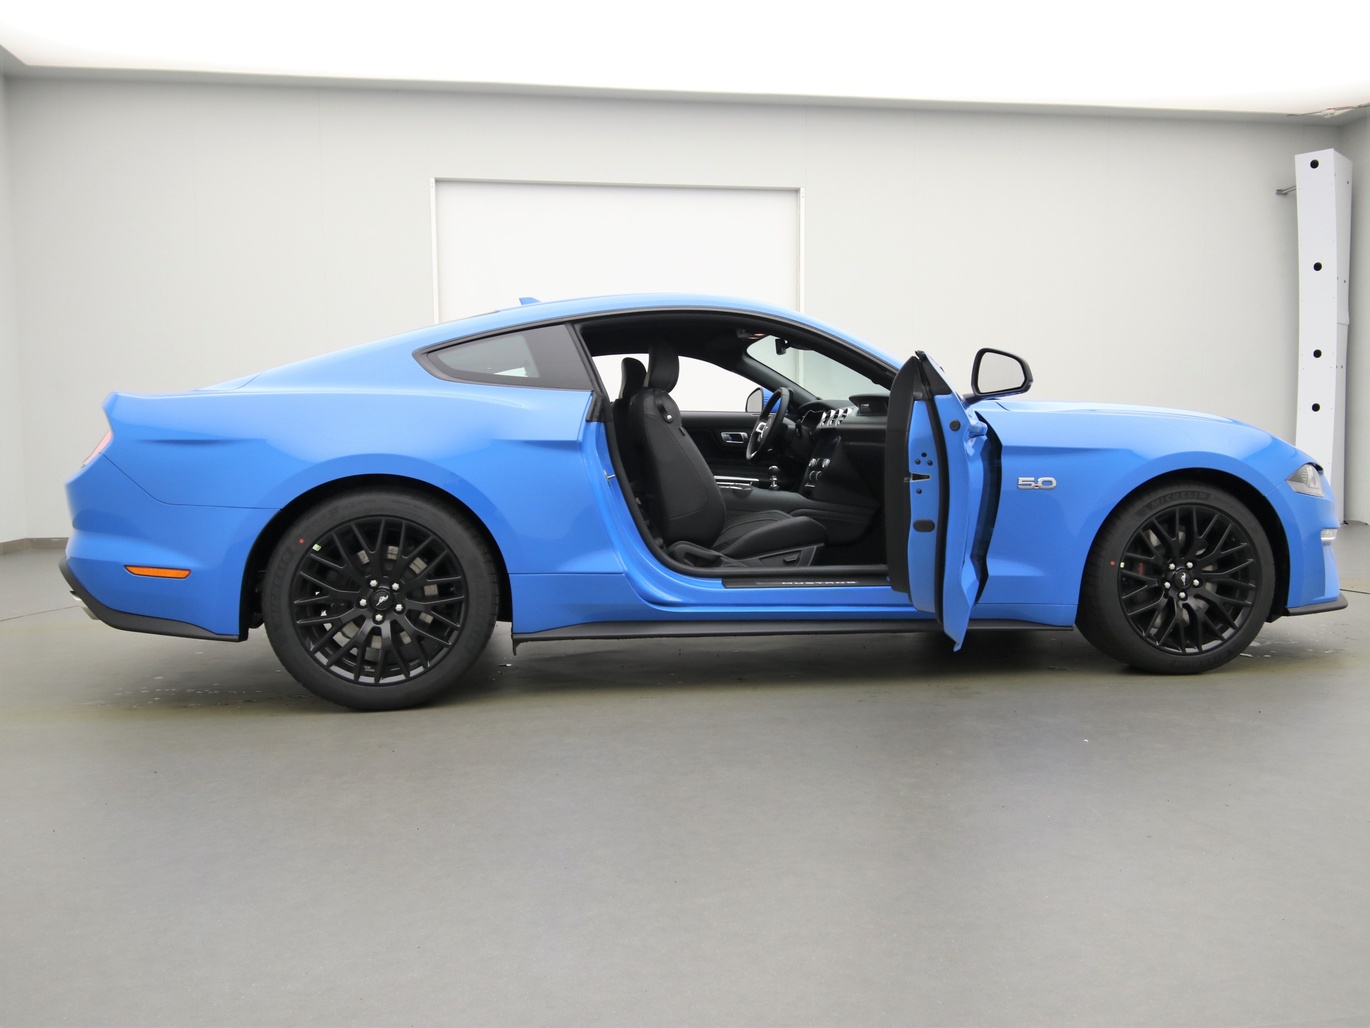  Ford Mustang GT Coupé V8 450PS / Premium 2 / Magne in Grabber Blue 